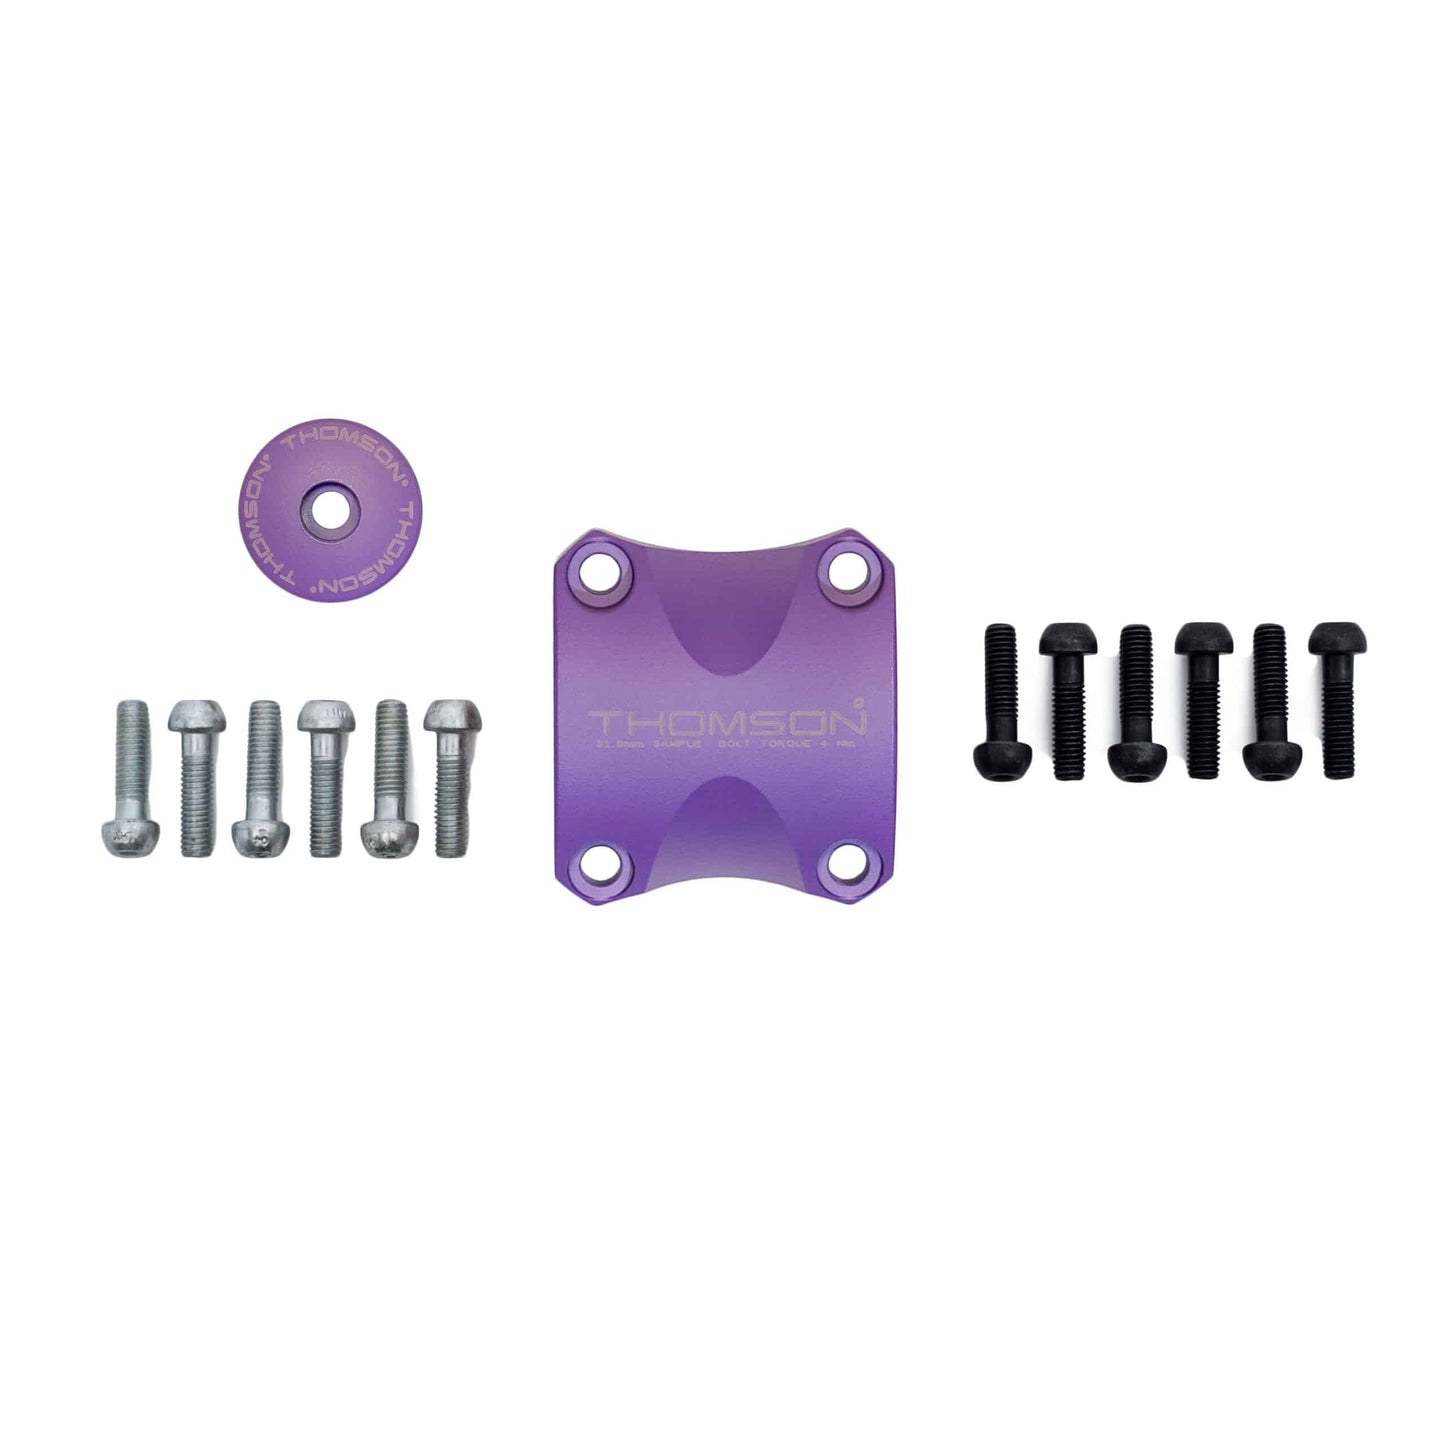 Thomson x4 Dress Up Kit Cerakote (purple)